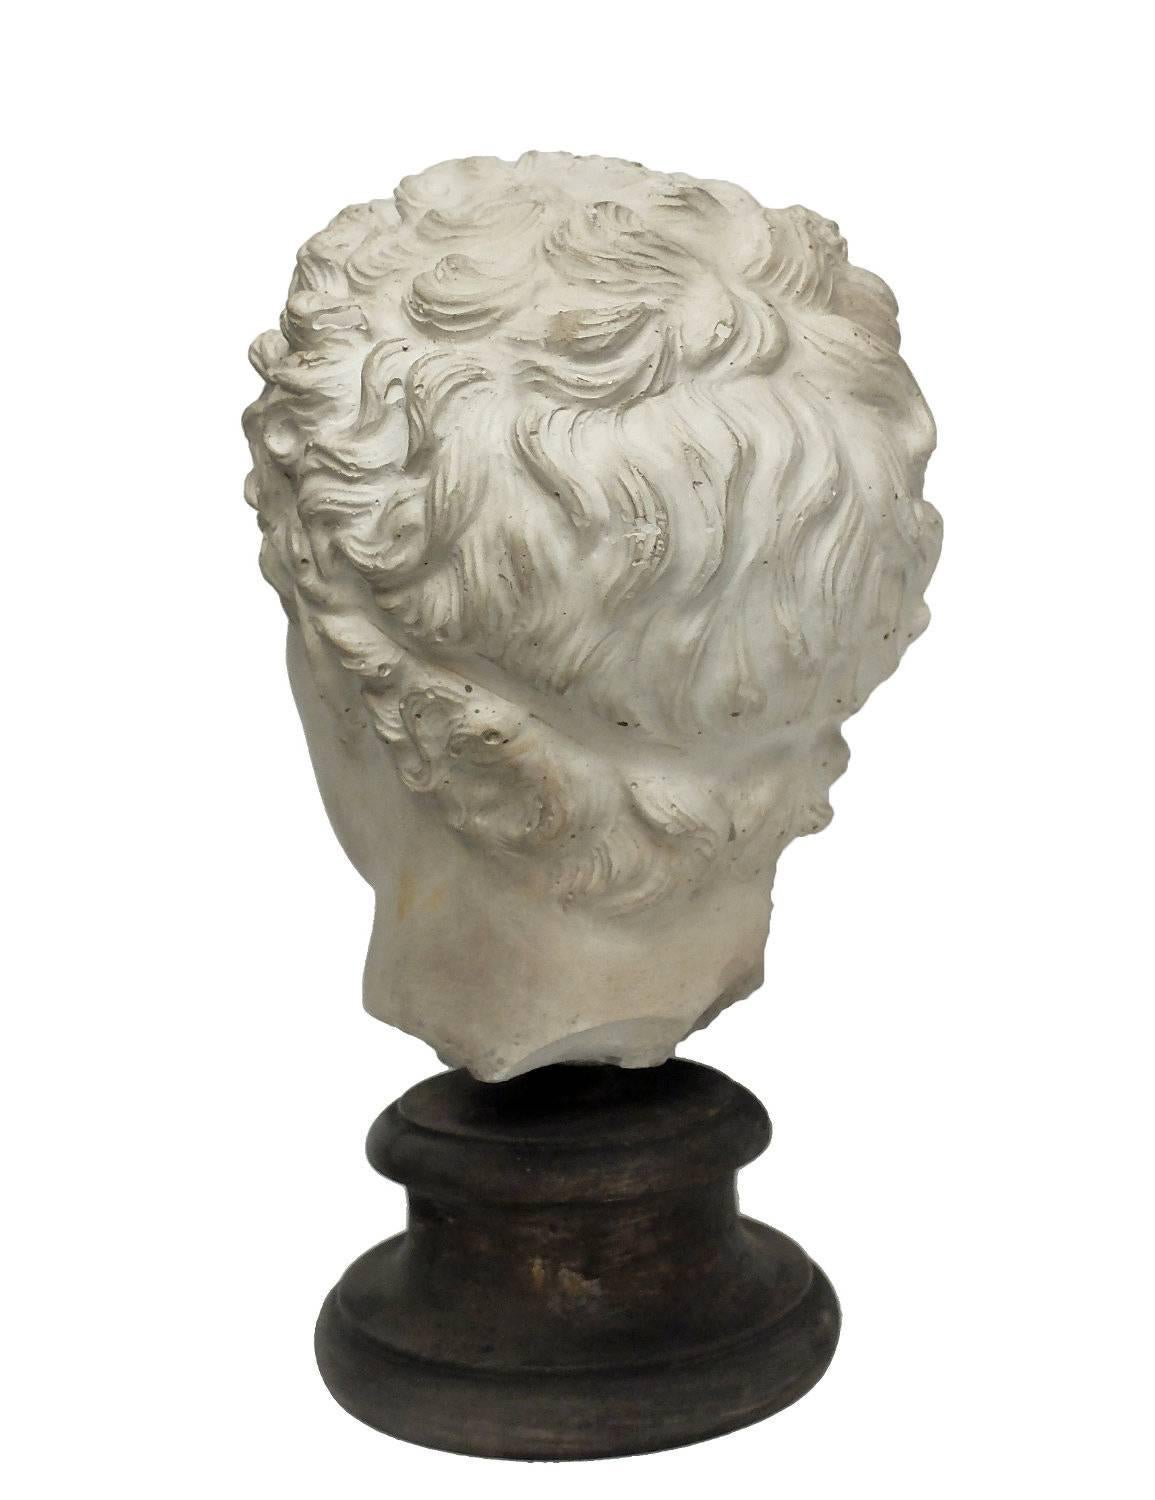 Italian Academic Cast of Plaster Depicting Hermes' Head